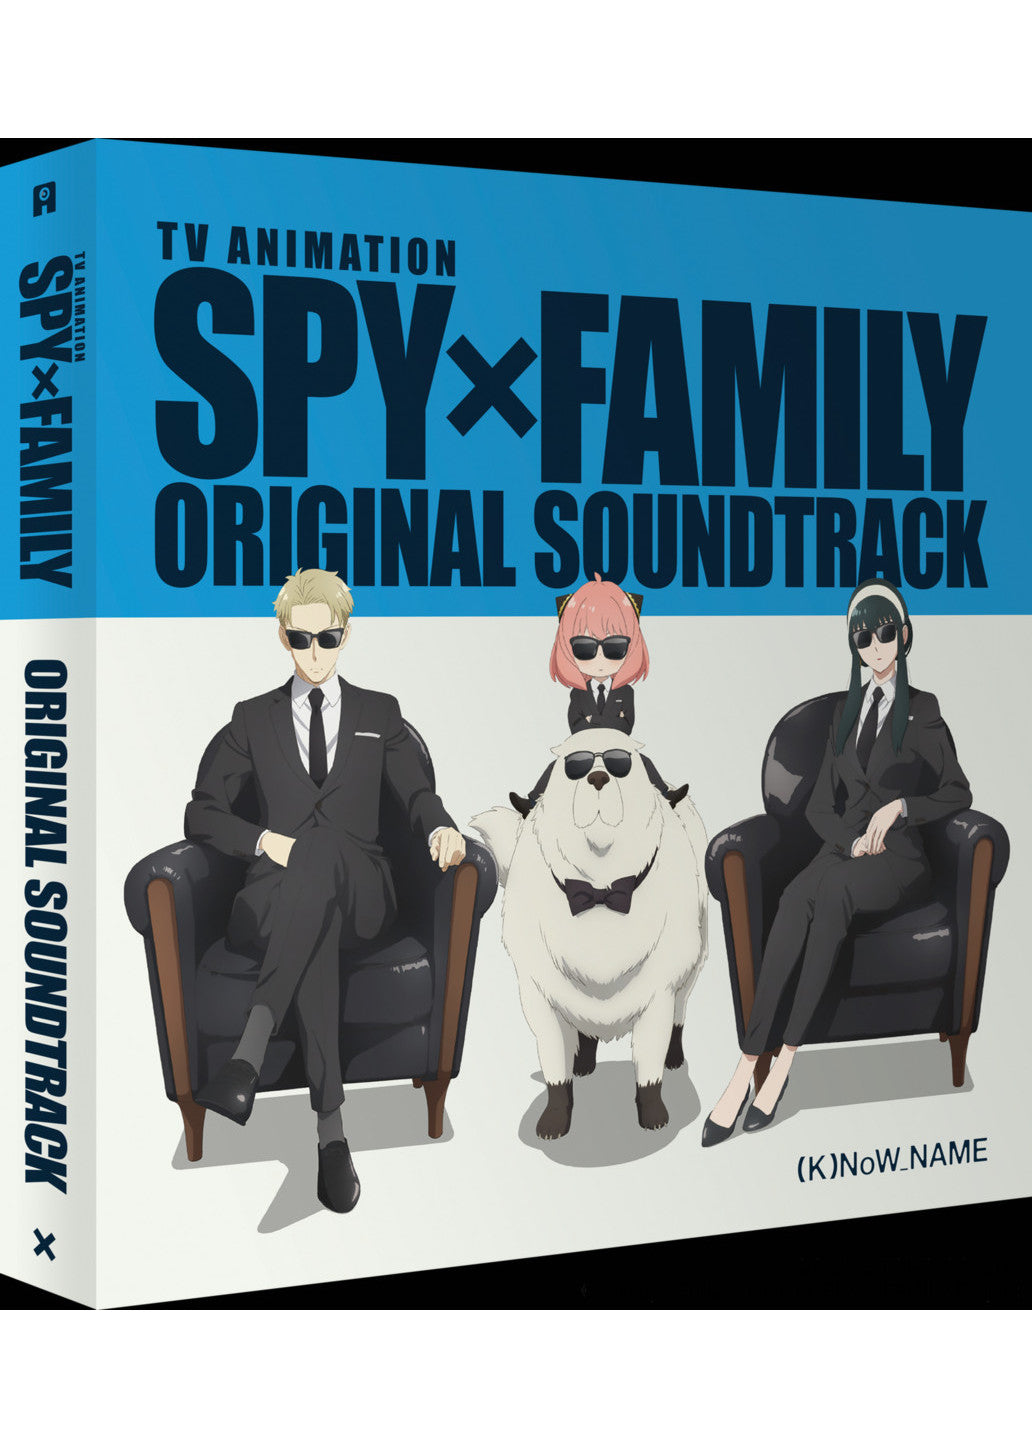 Spy X Family Original Vinyl Soundtrack Deluxe